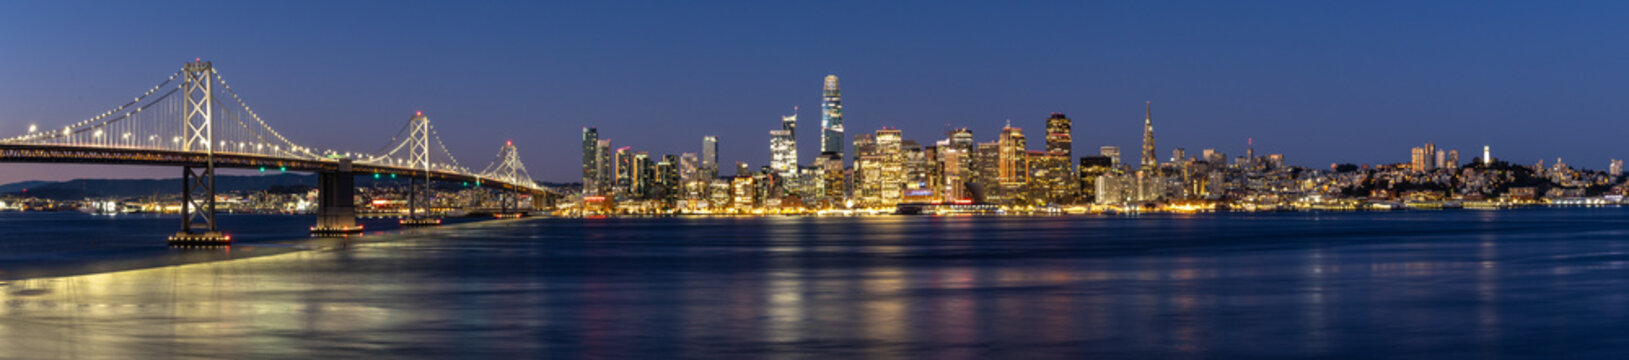 View of the Bay Bridge and San Francisco skyline at dawn from Treasure Island